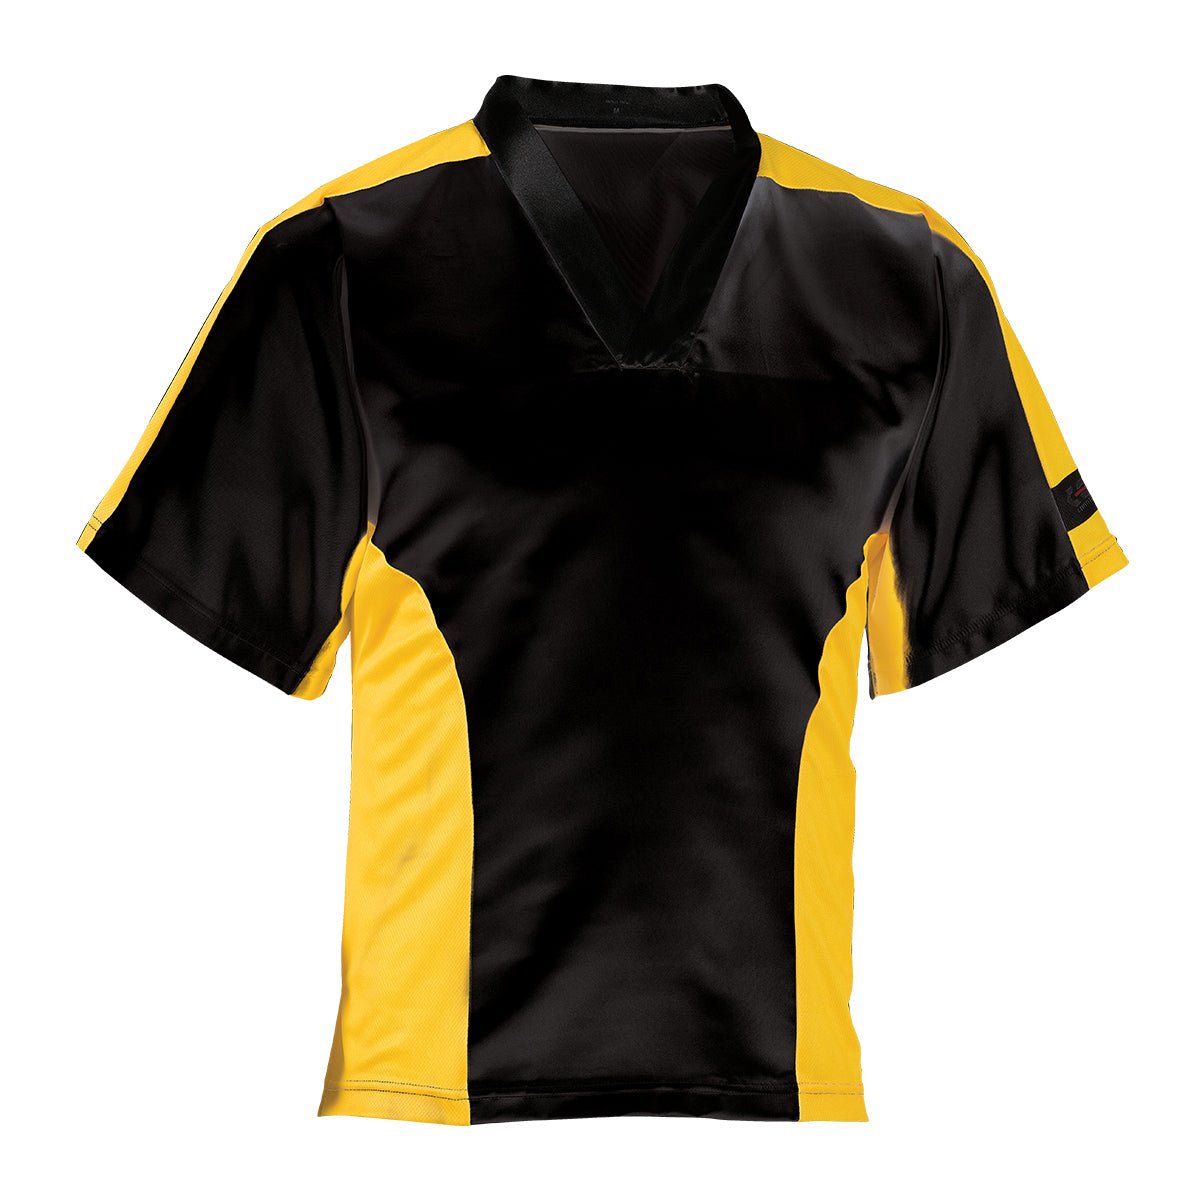 C-Gear Honor Uniform Top Black/Yellow